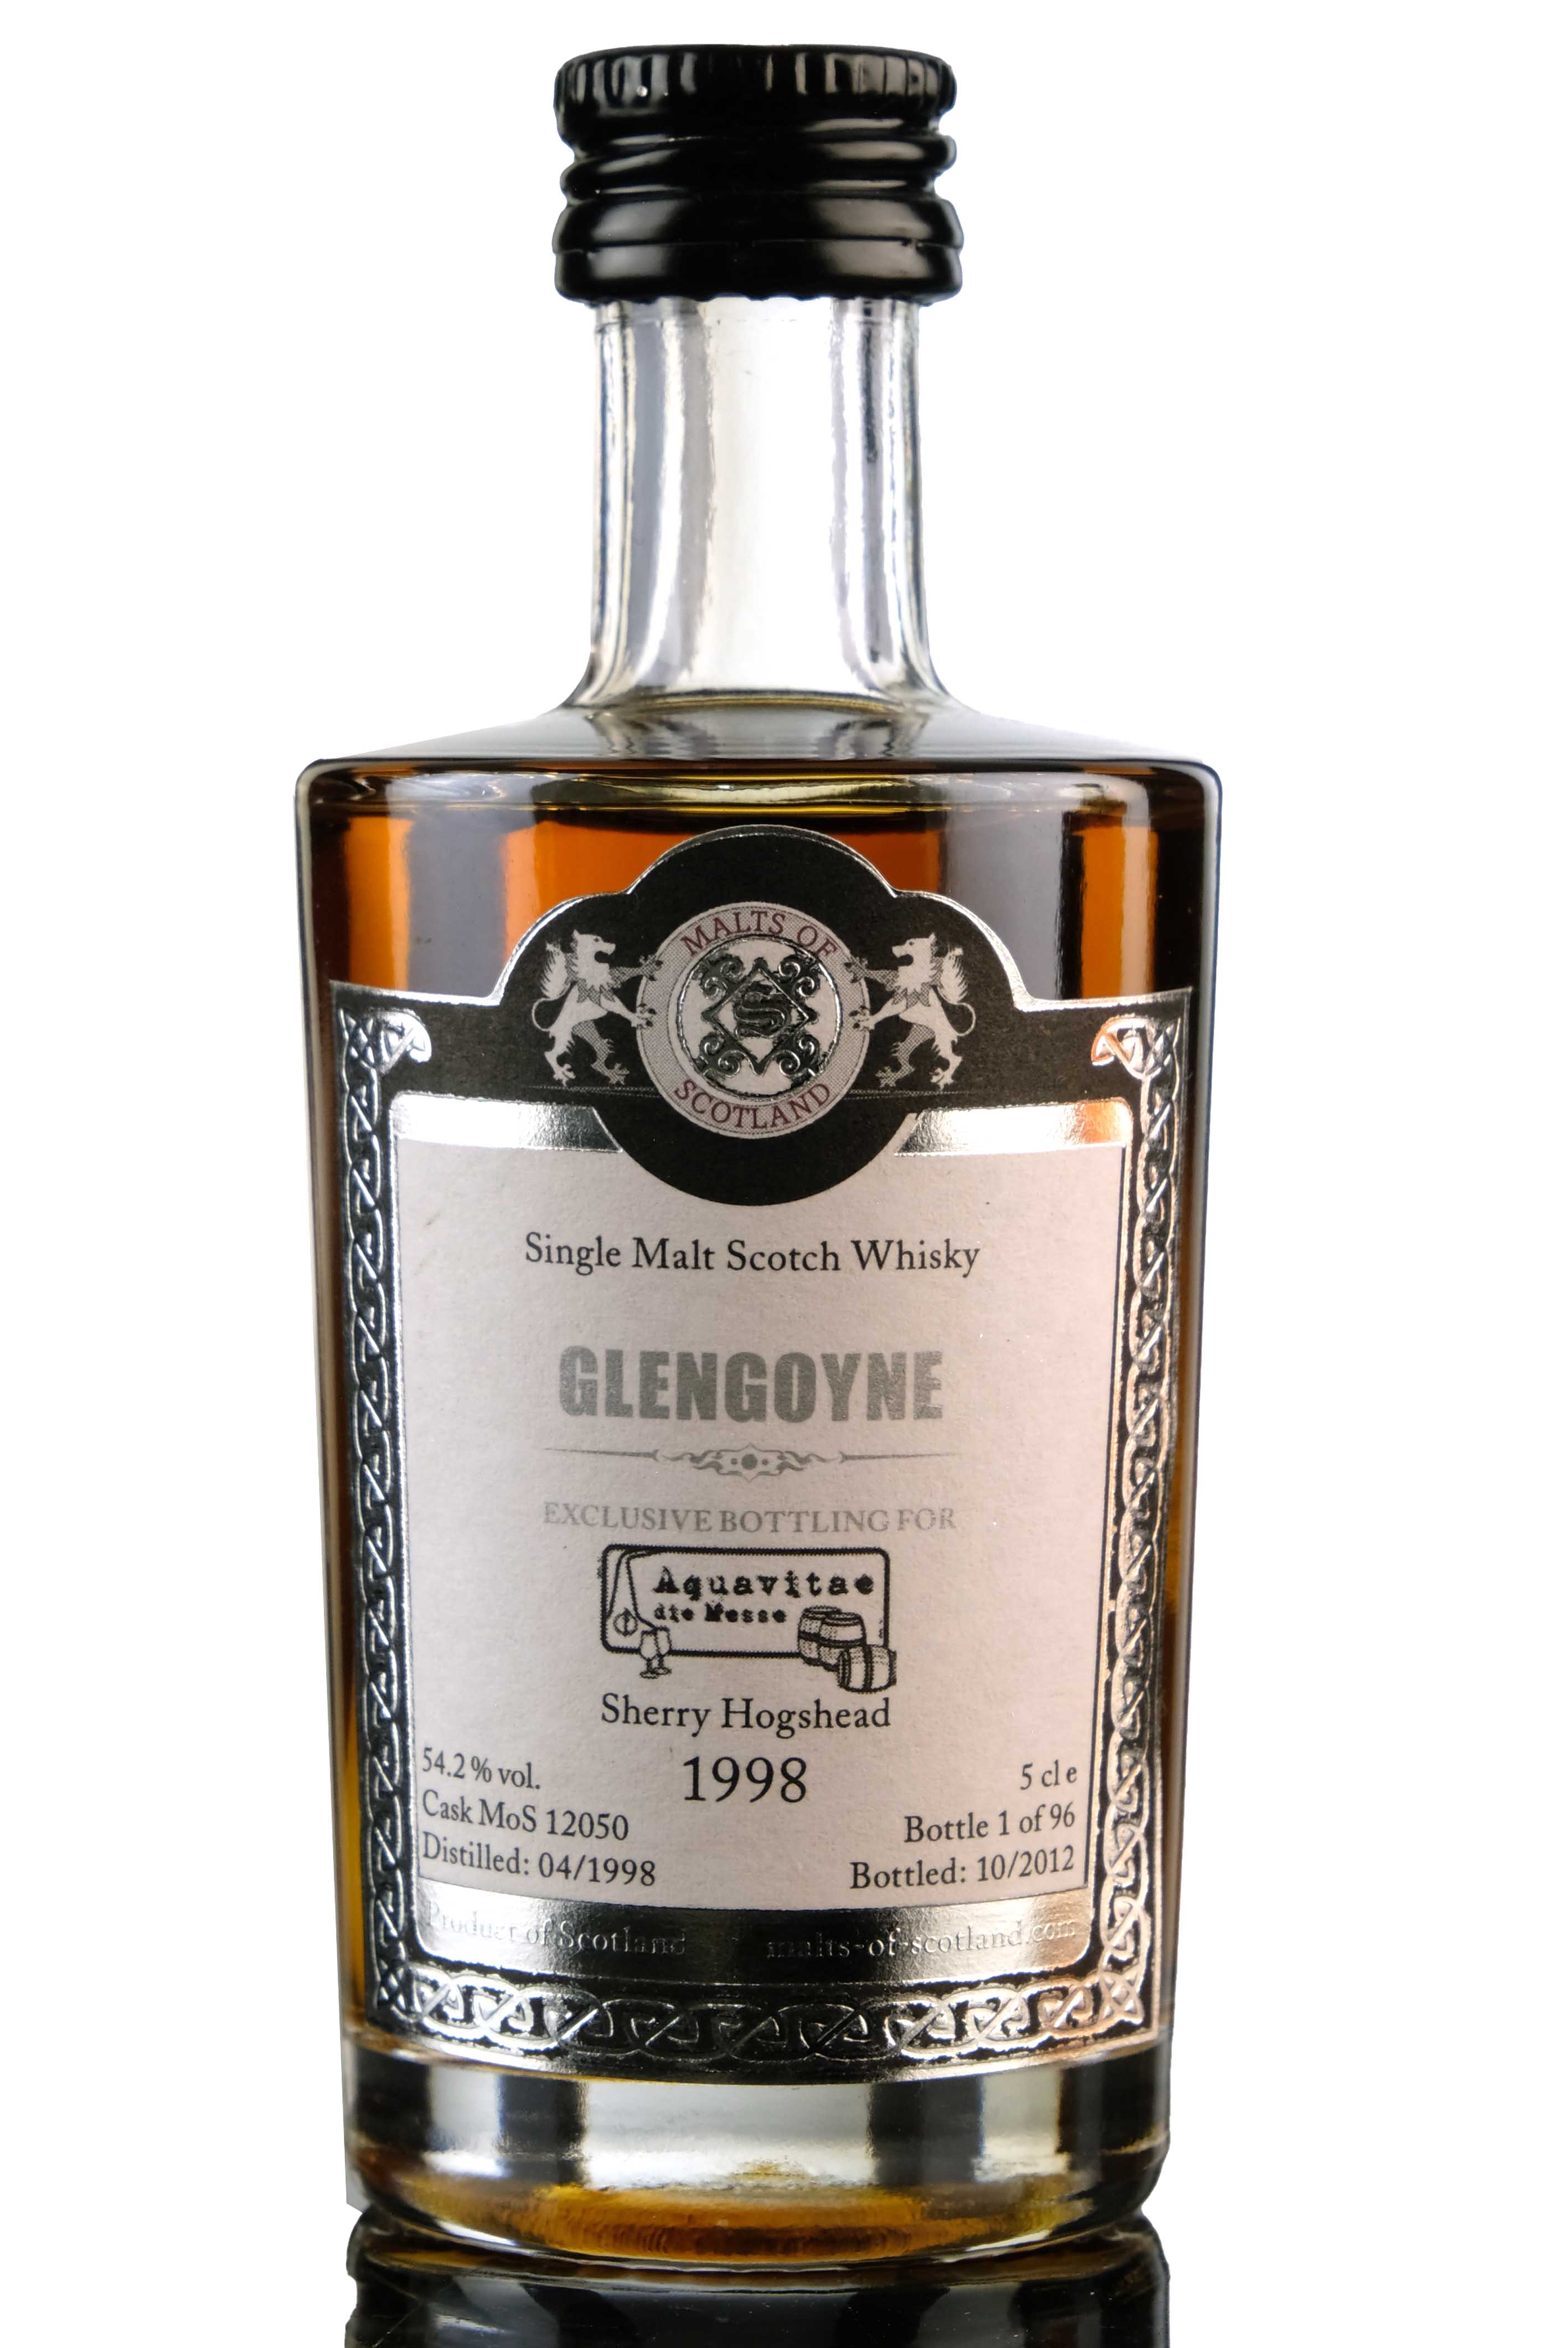 Glengoyne 1998-2012 - Single Cask 12050 - Malts Of Scotland Miniature